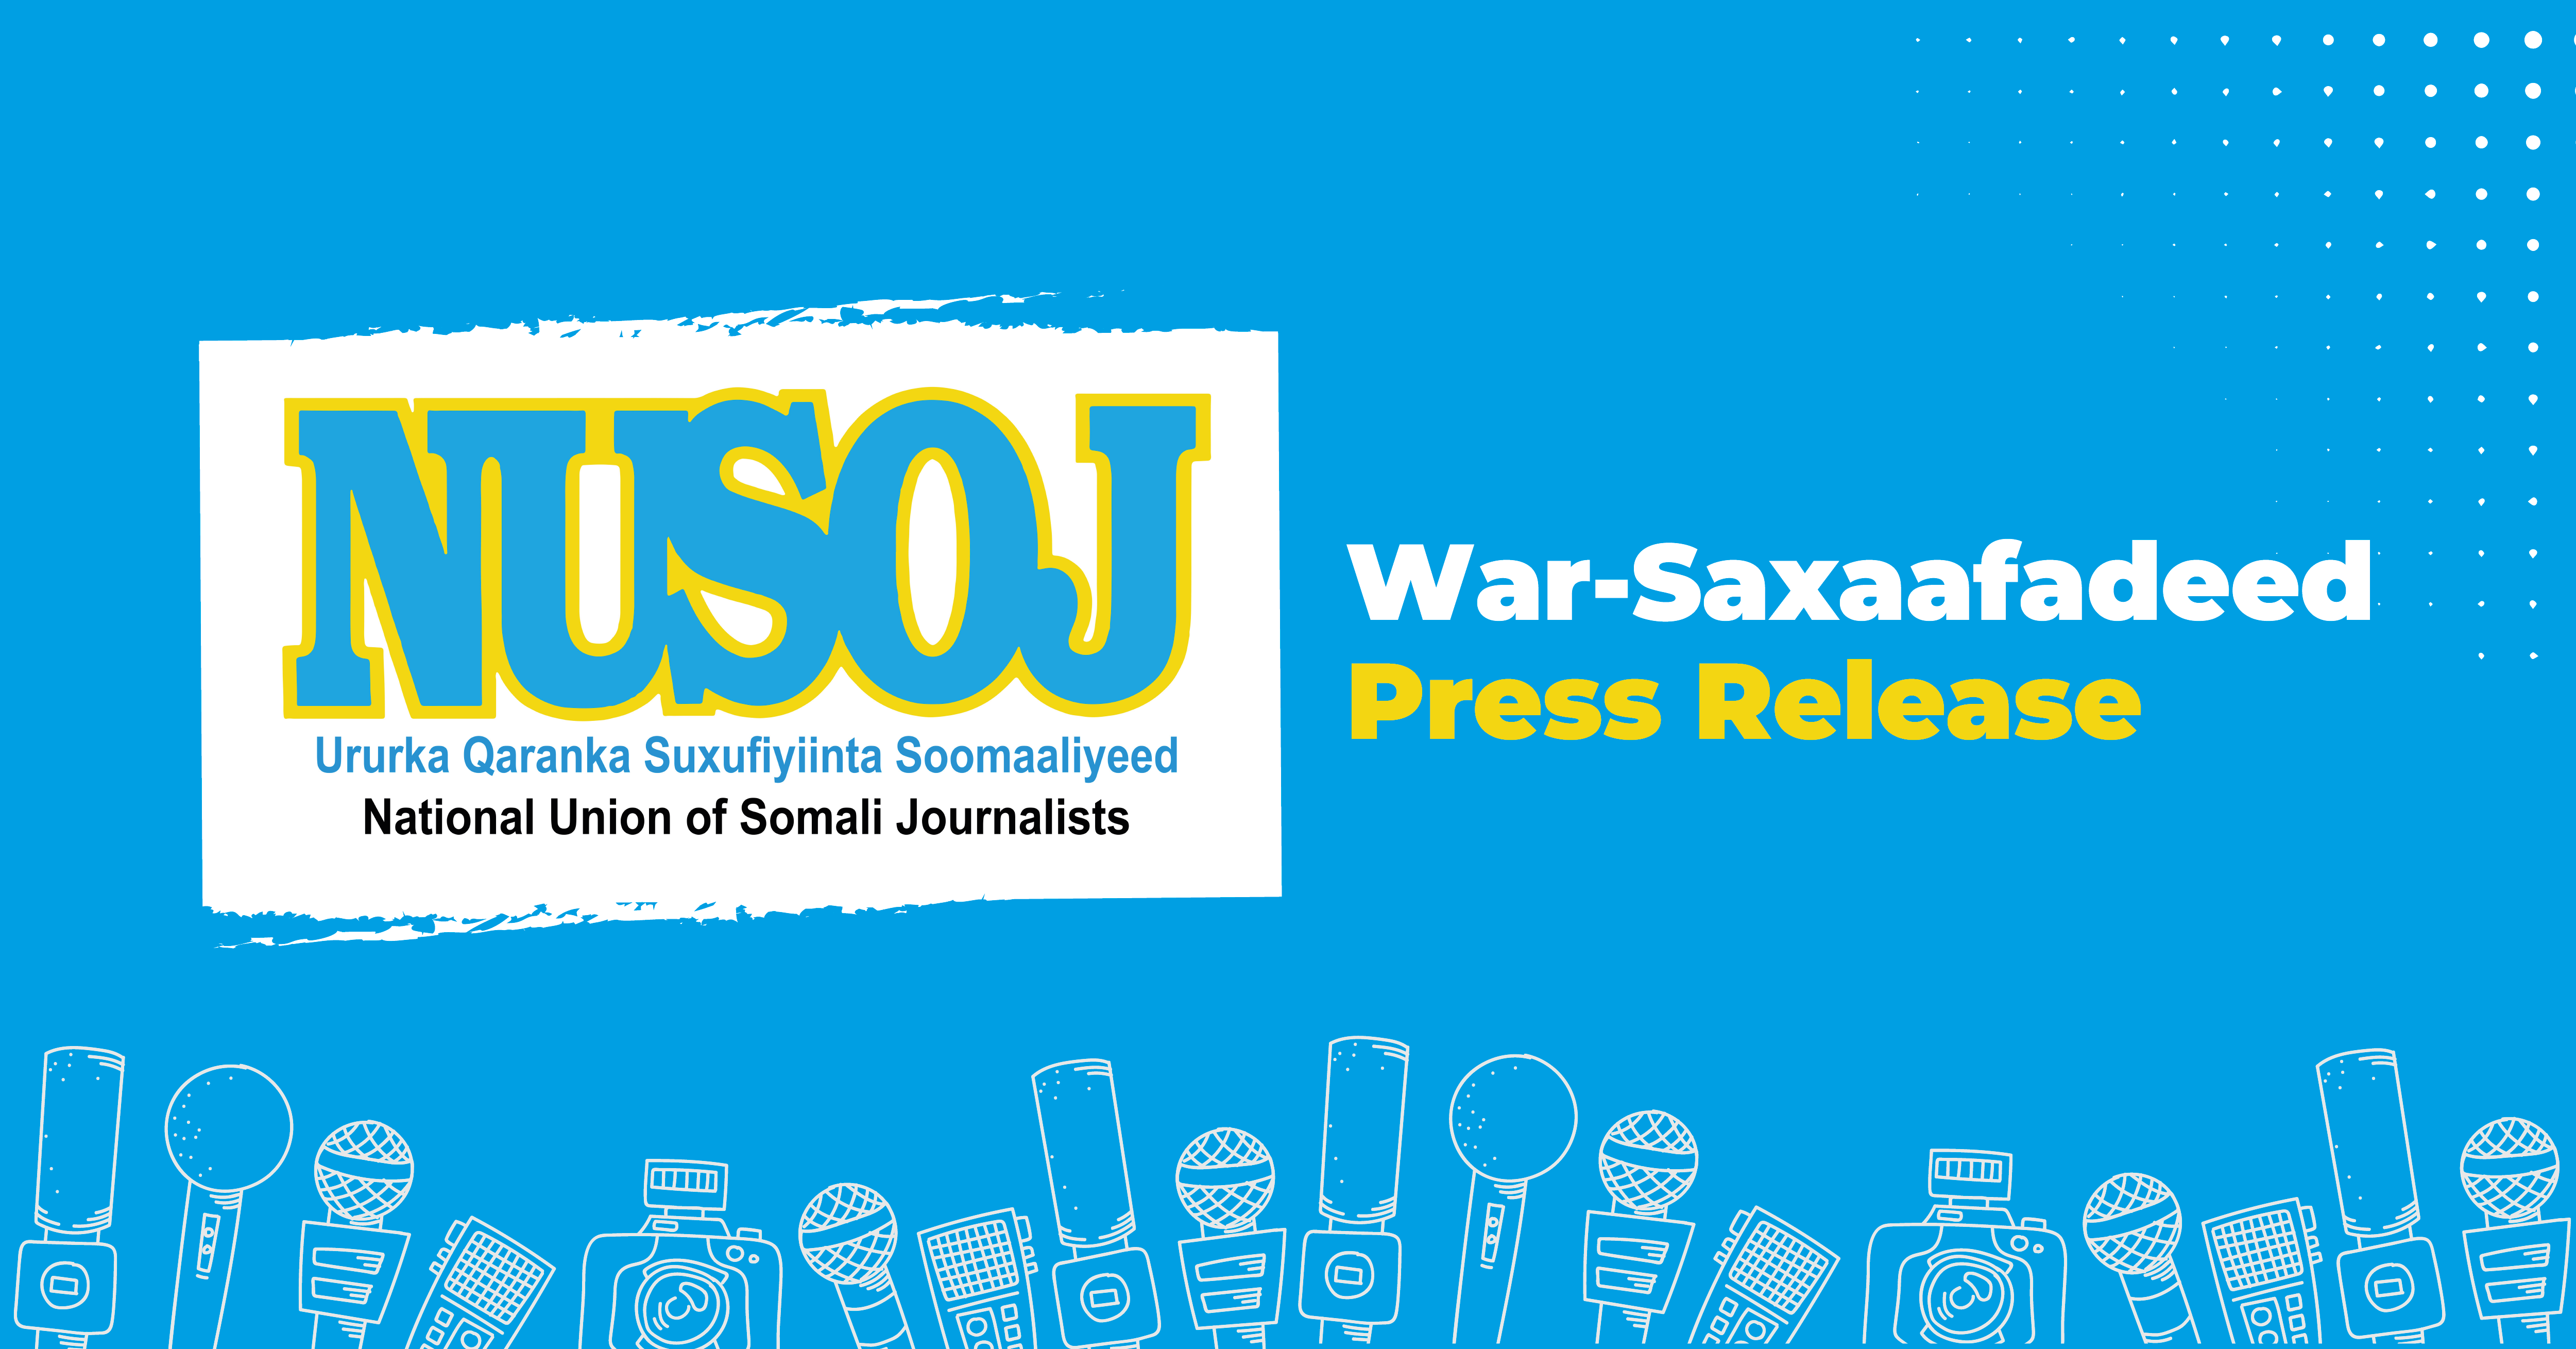 Poor working conditions threaten integrity of journalism in Somalia